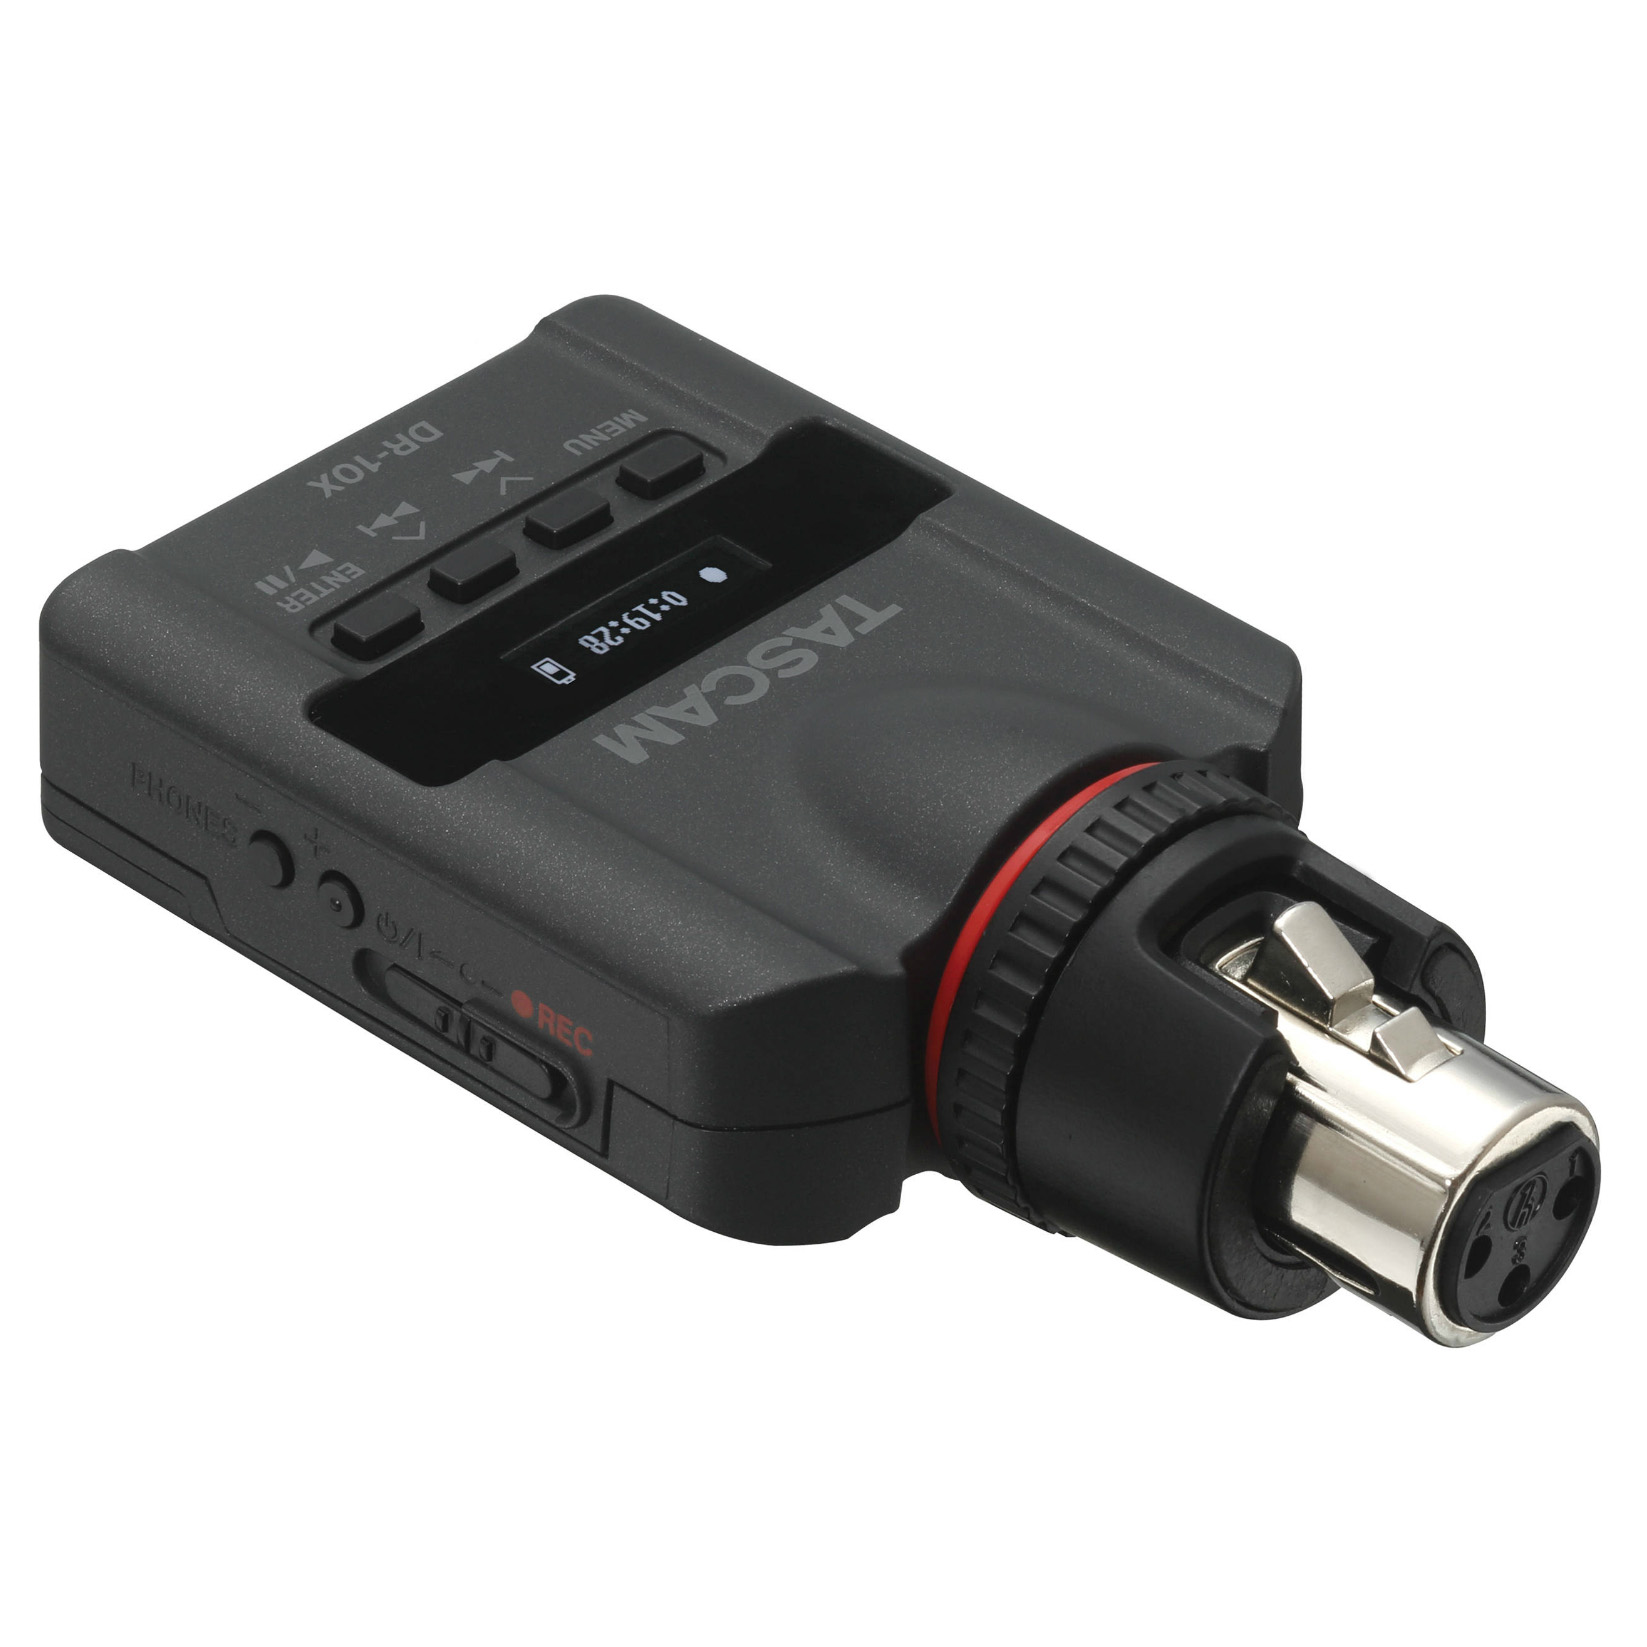 Tascam DR-10X Рекордеры аудио видео